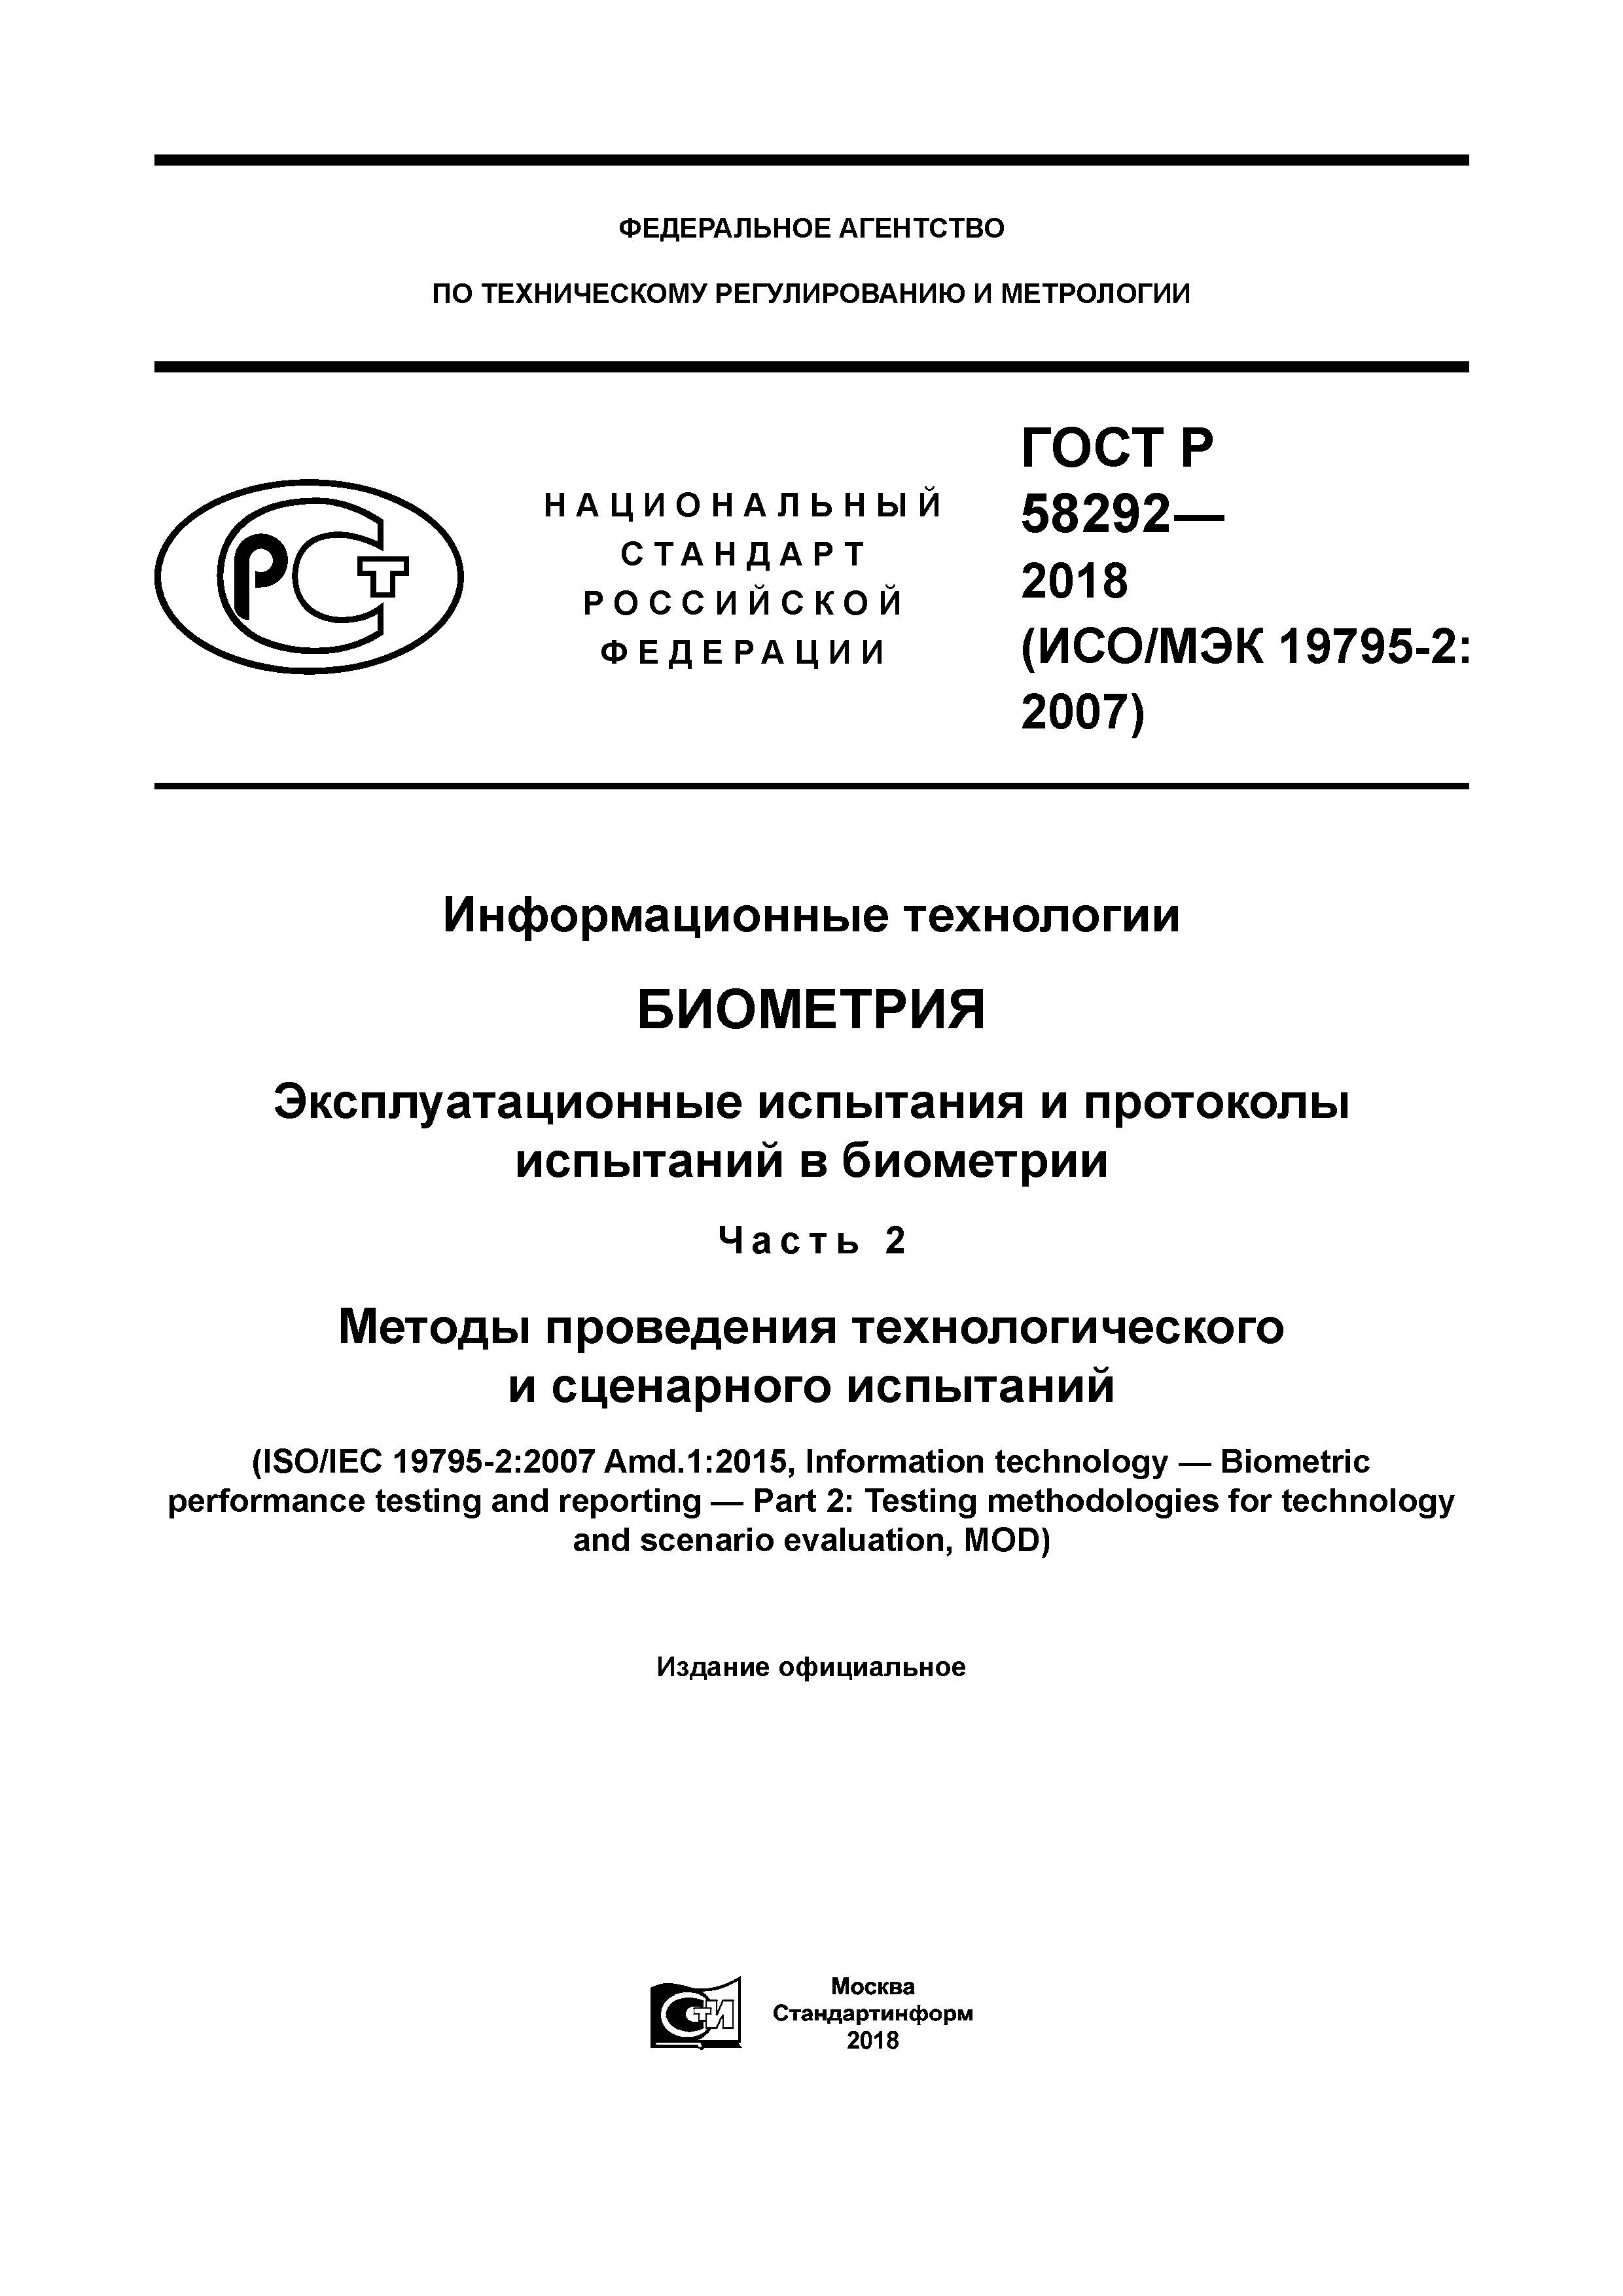 ГОСТ Р 58292-2018